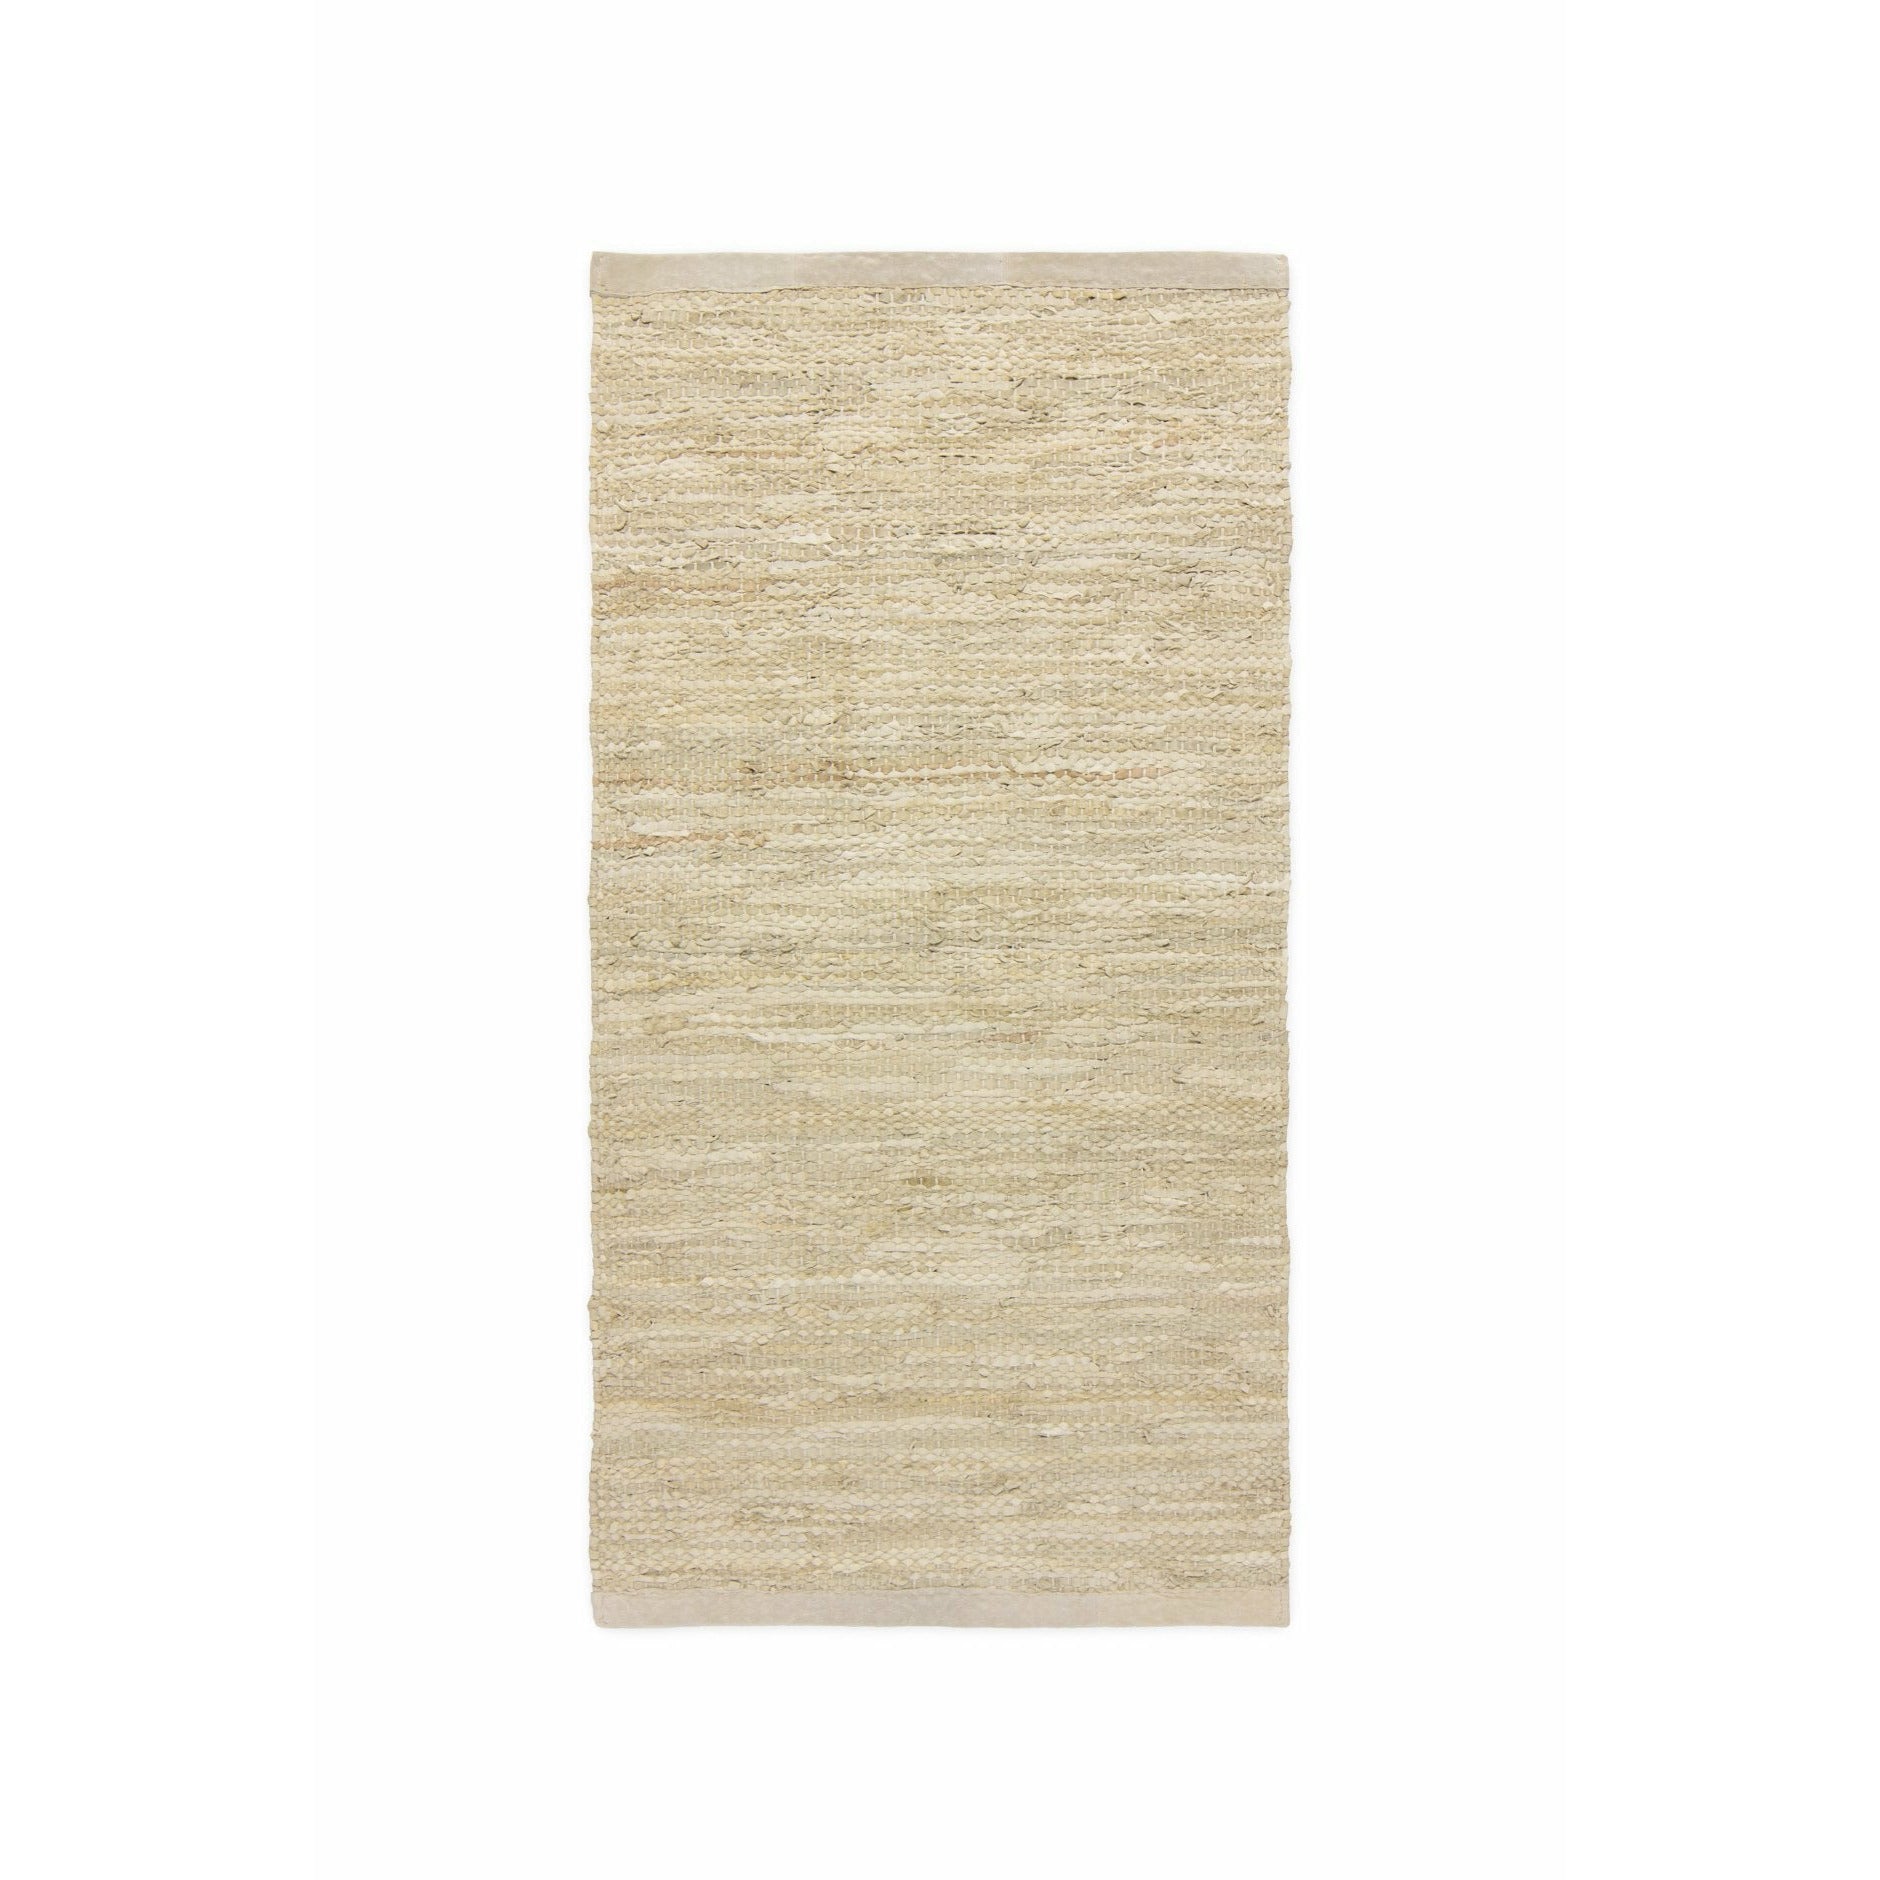 Tappeto in pelle solida beige, 65 x 135 cm